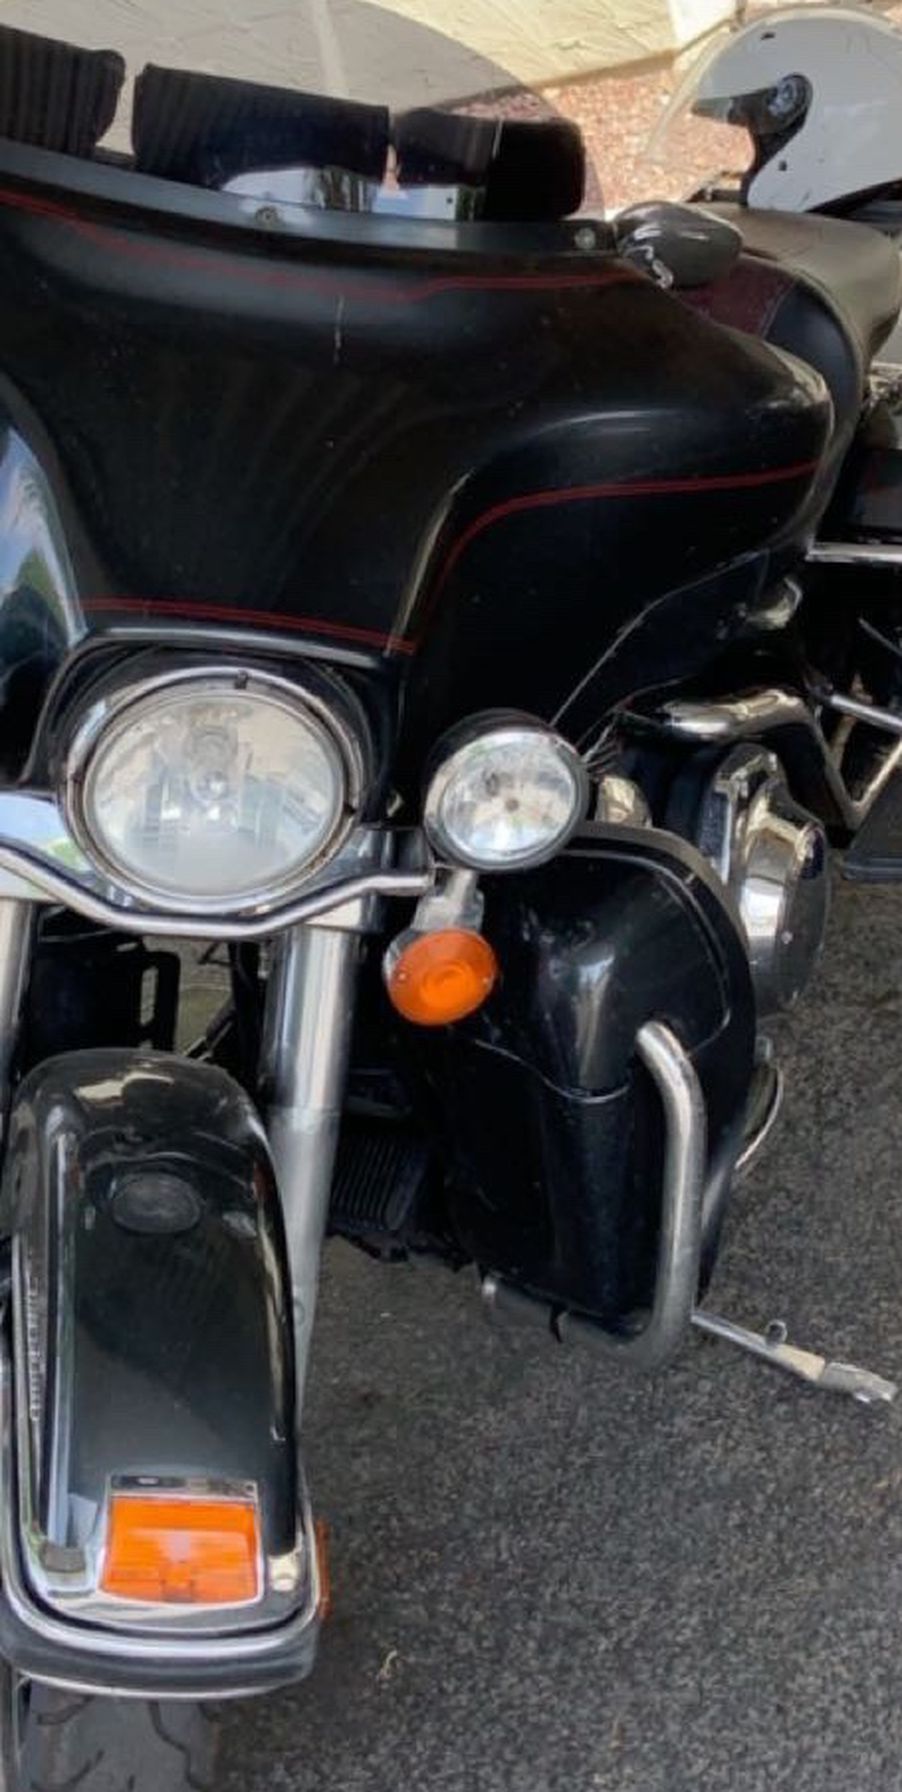 2008 Harley Davidson ultra classic